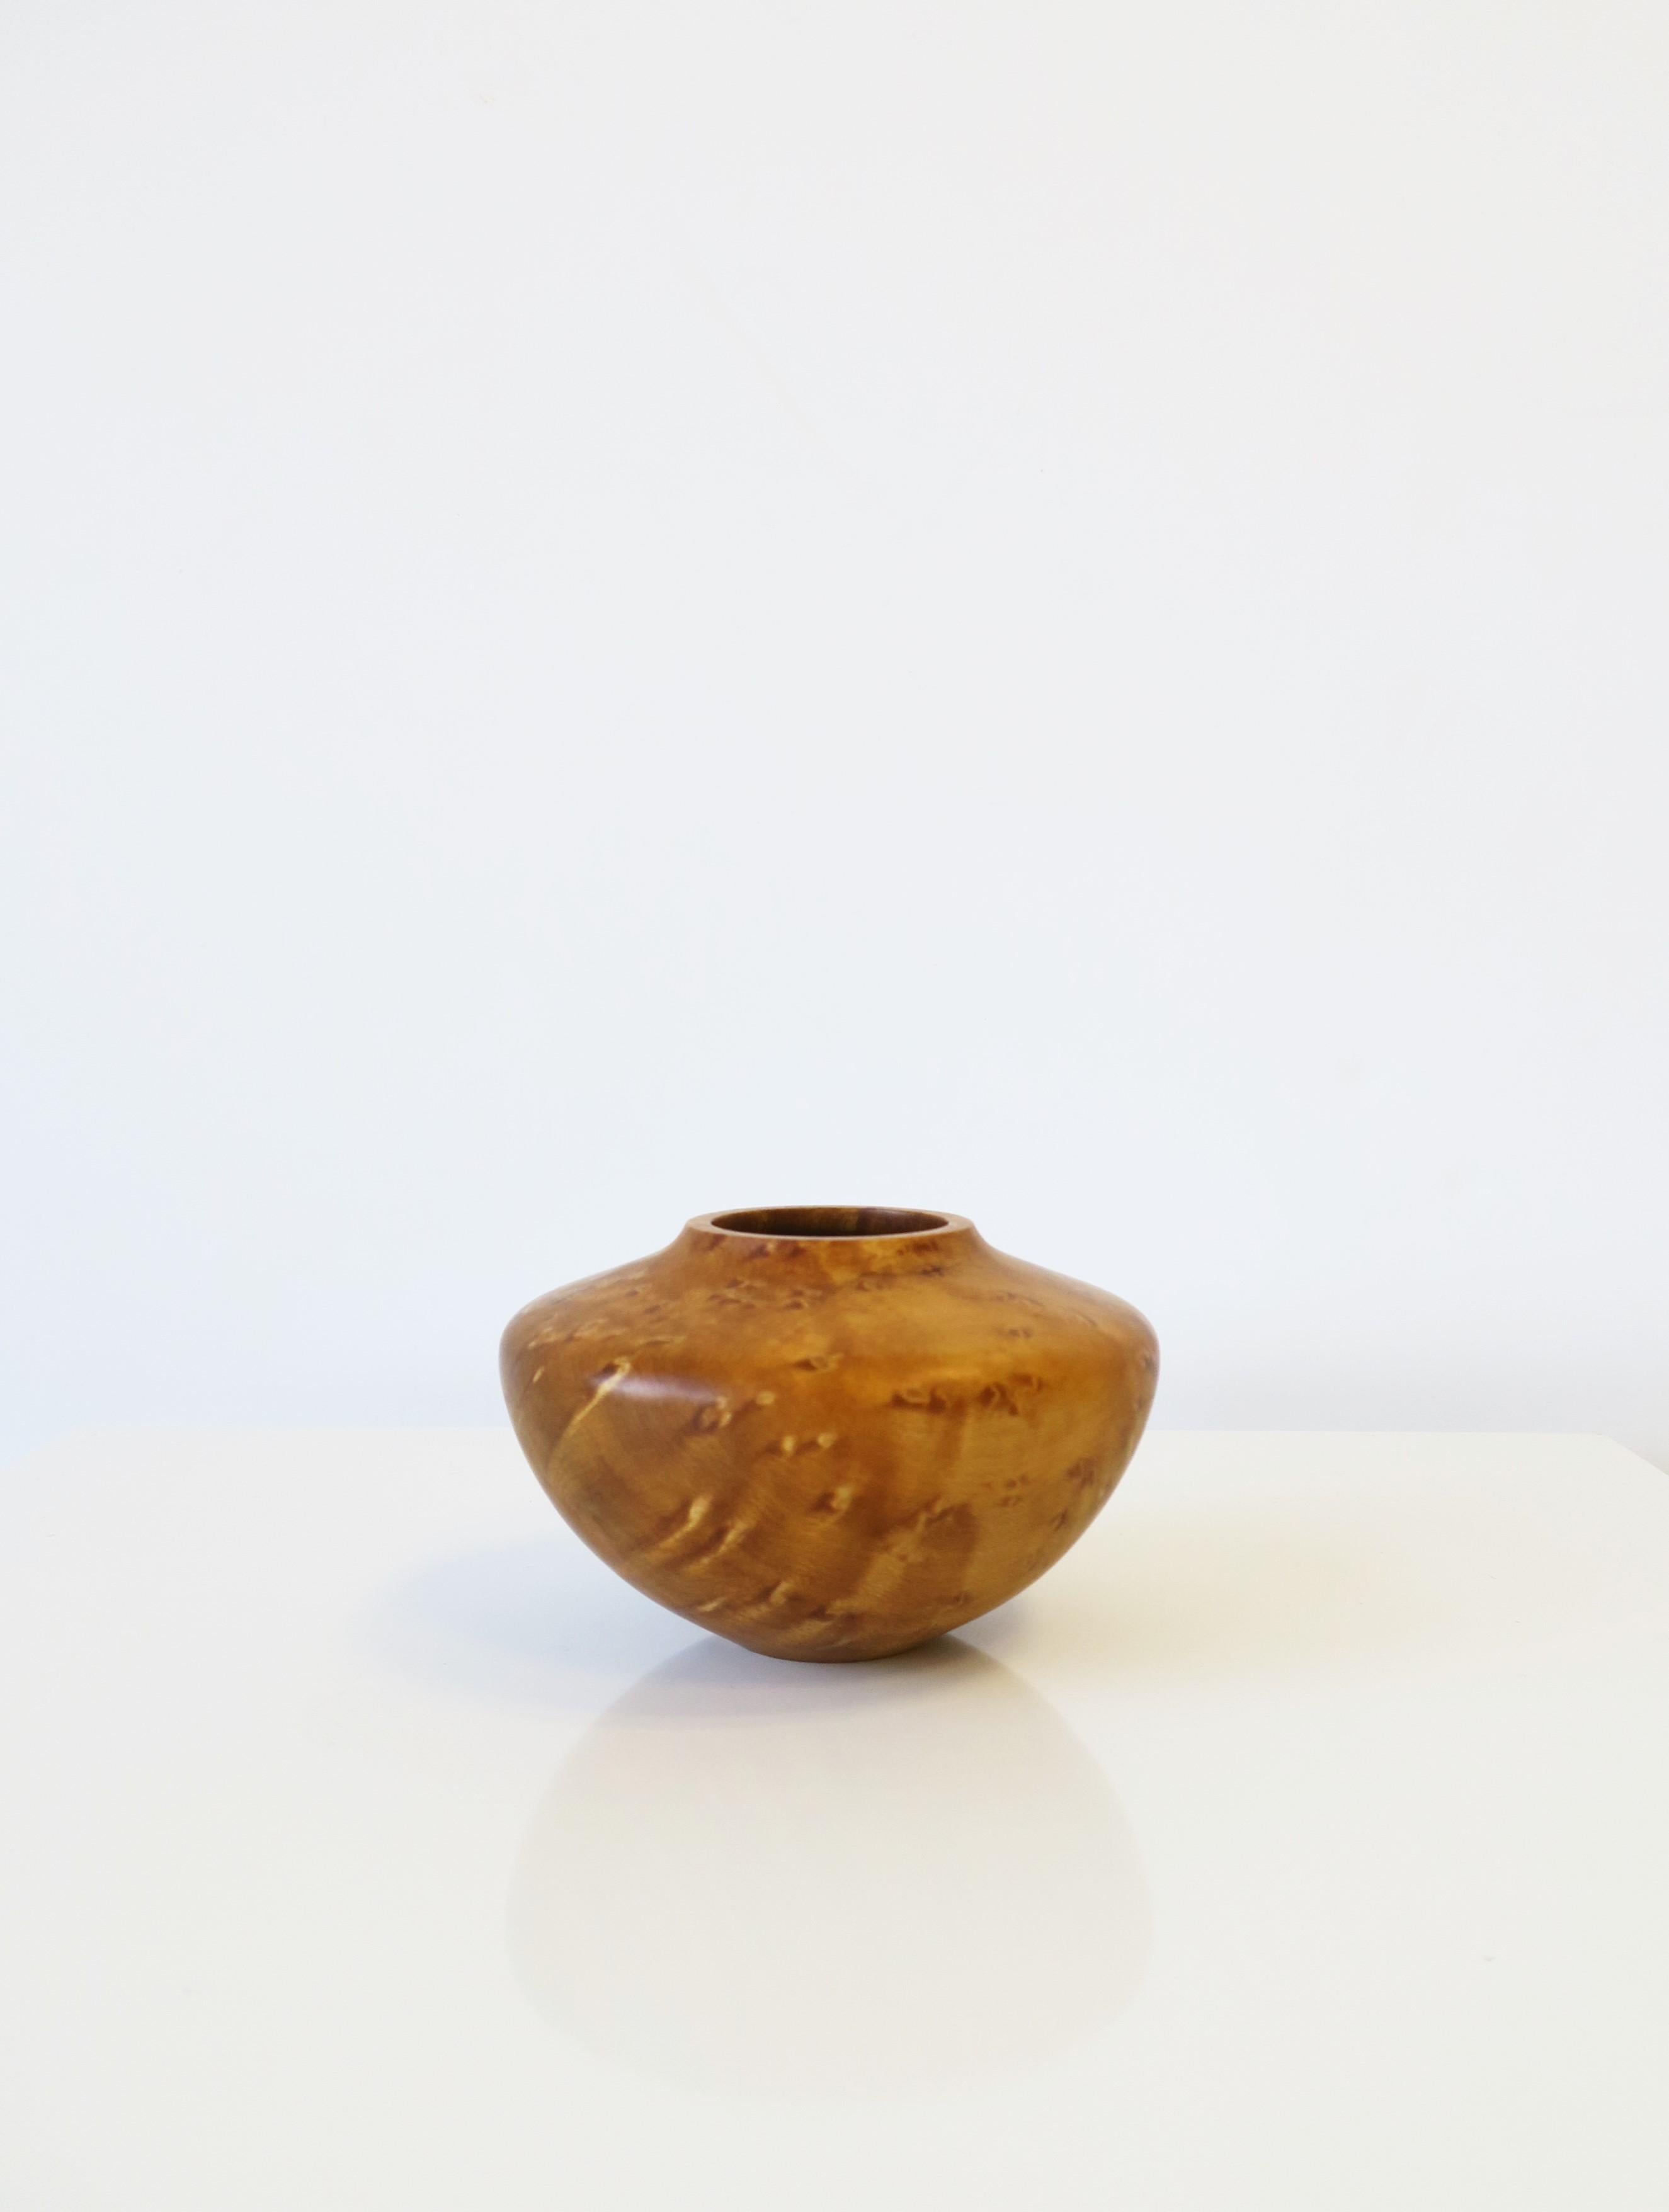 Studio Natural Birdseye Maple Wood Urn Vase Signed 5